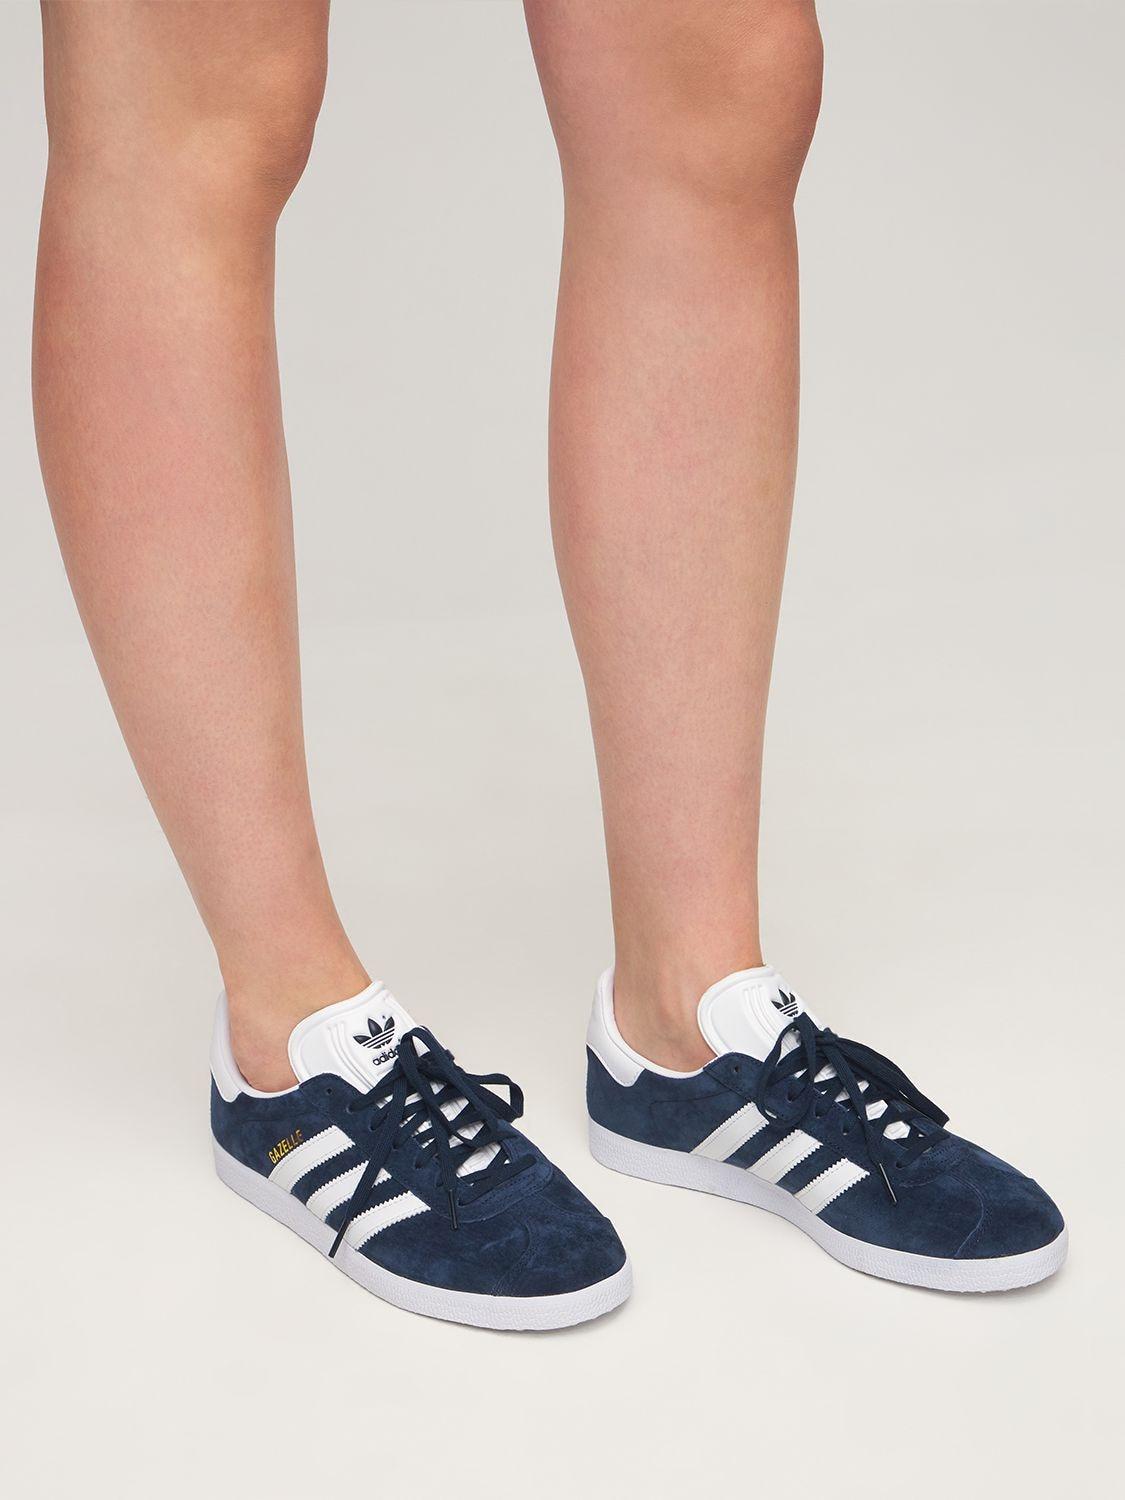 adidas Originals Suede Gazelle Sneakers in Navy (Blue) - Save 41% - Lyst